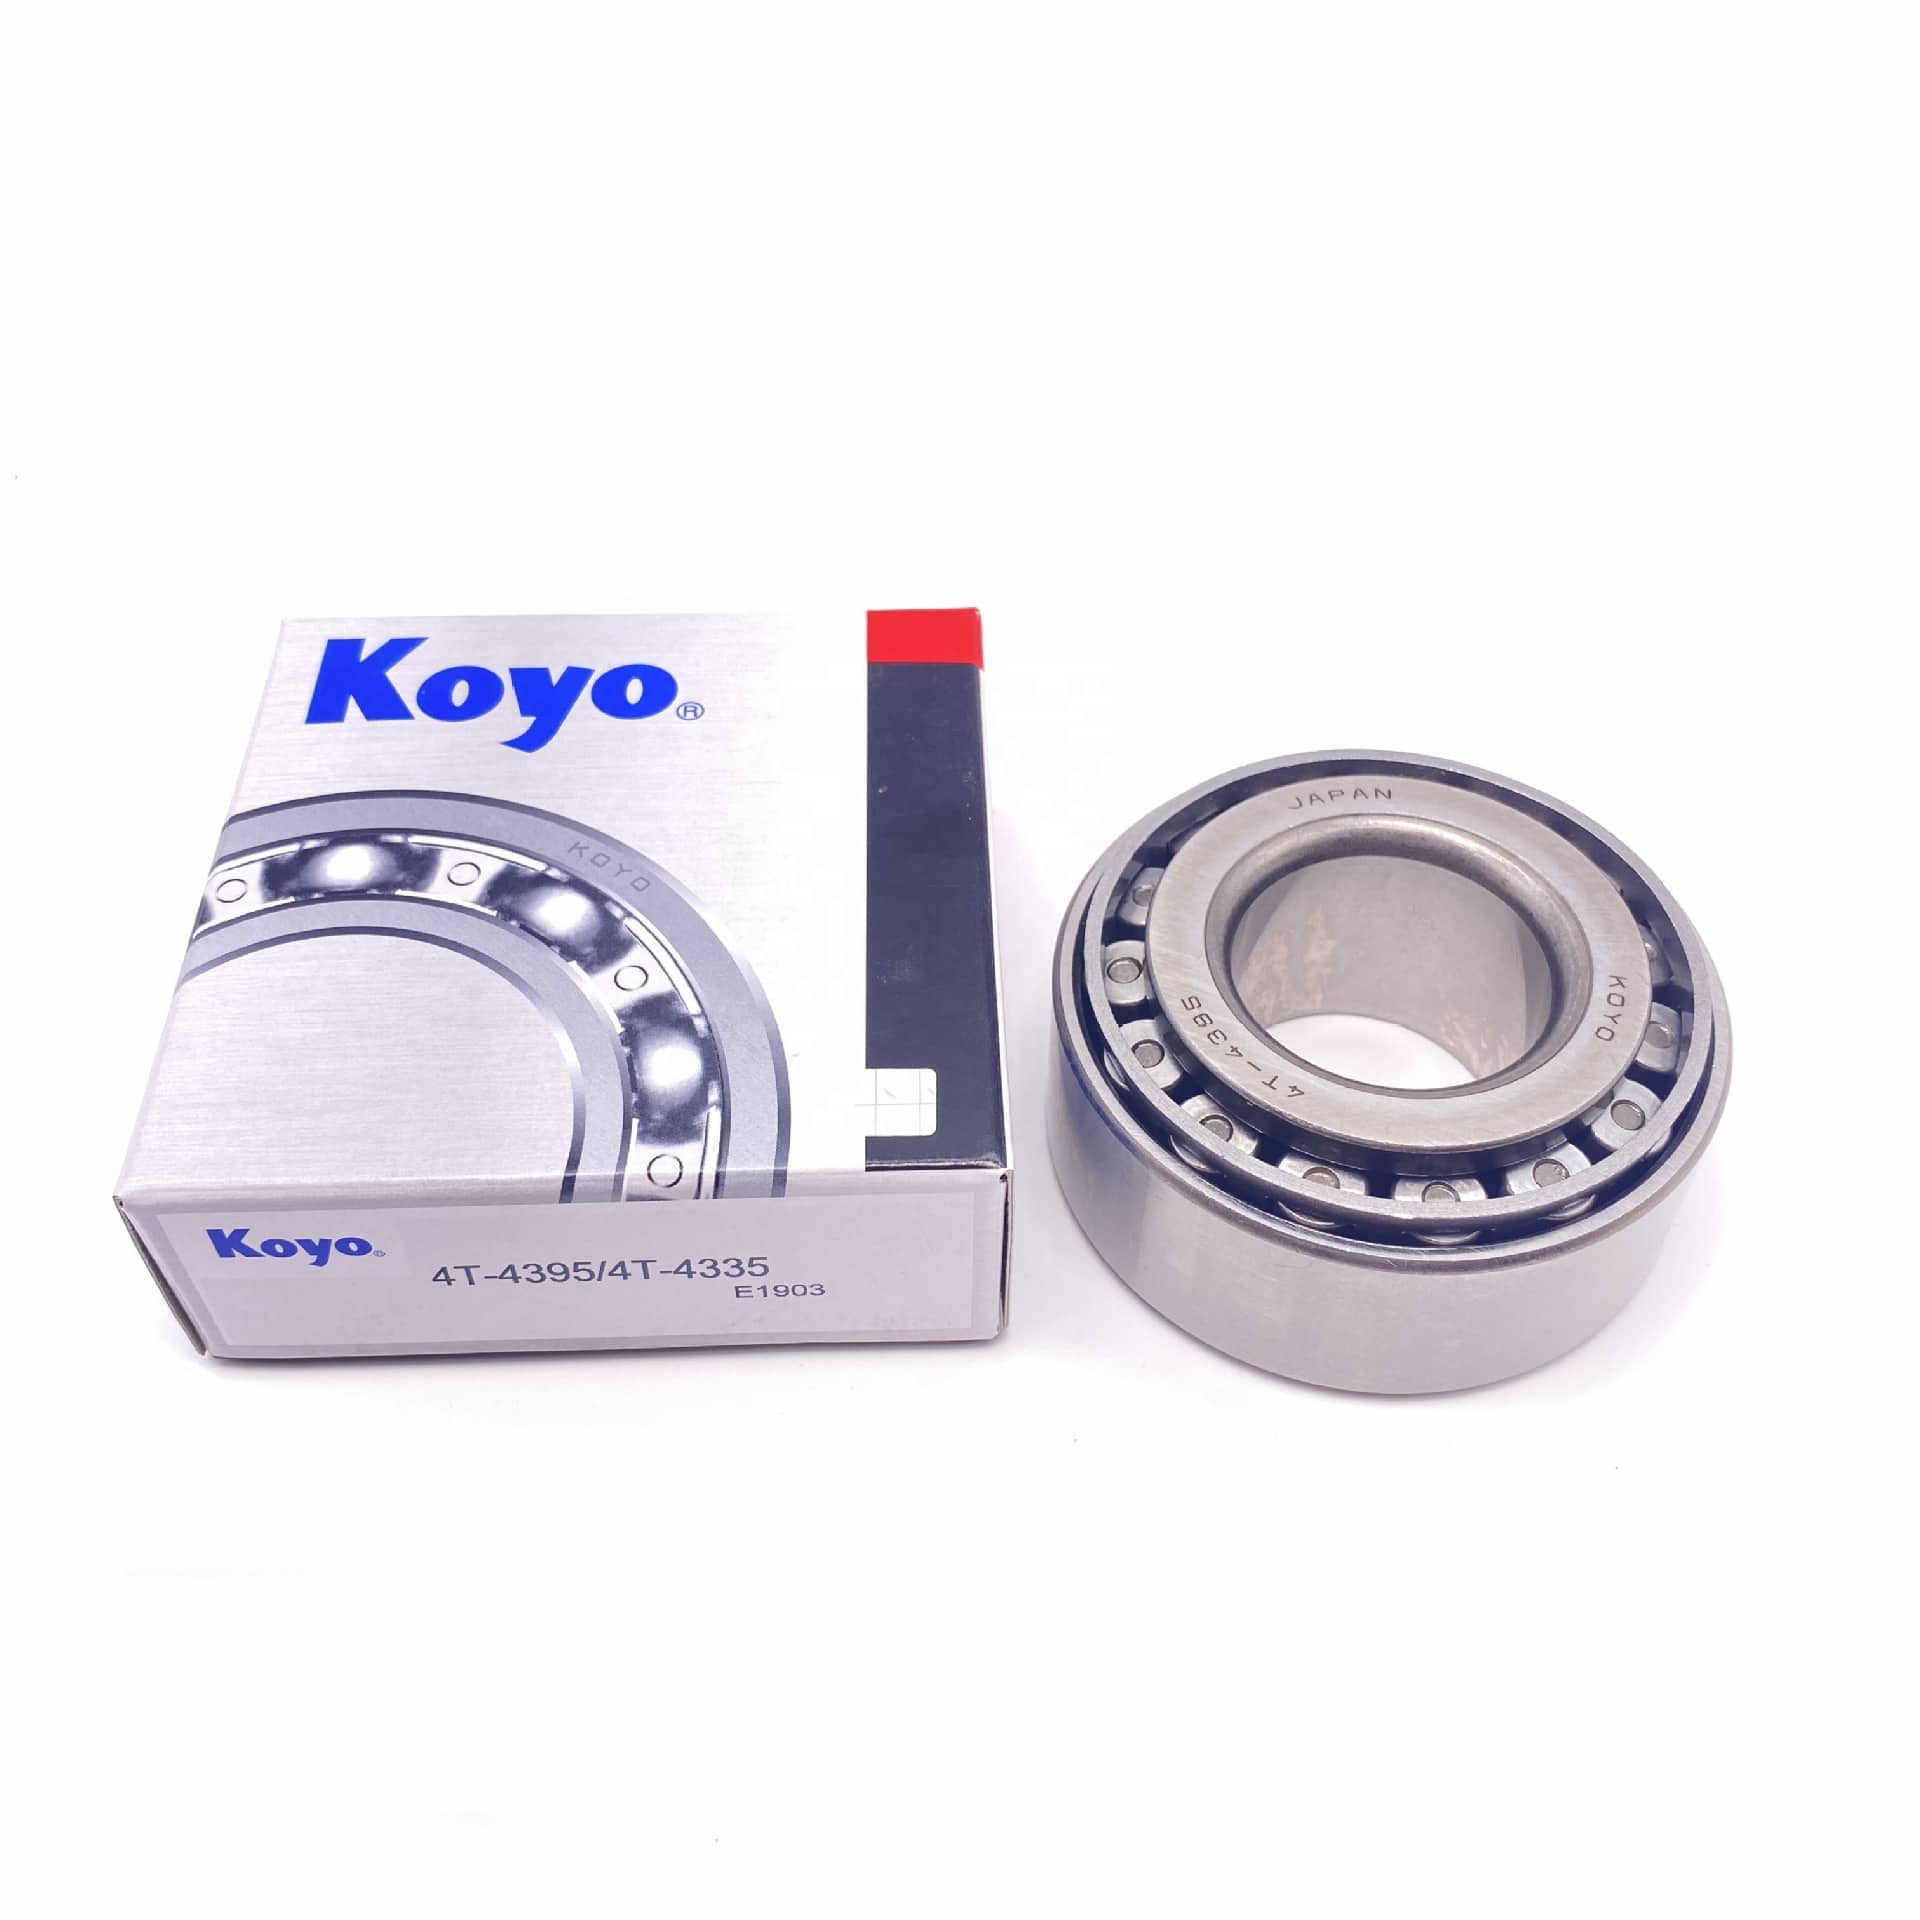 Koyo 4395/4335 Taper roller beearing for Plastic Packaging Machinery